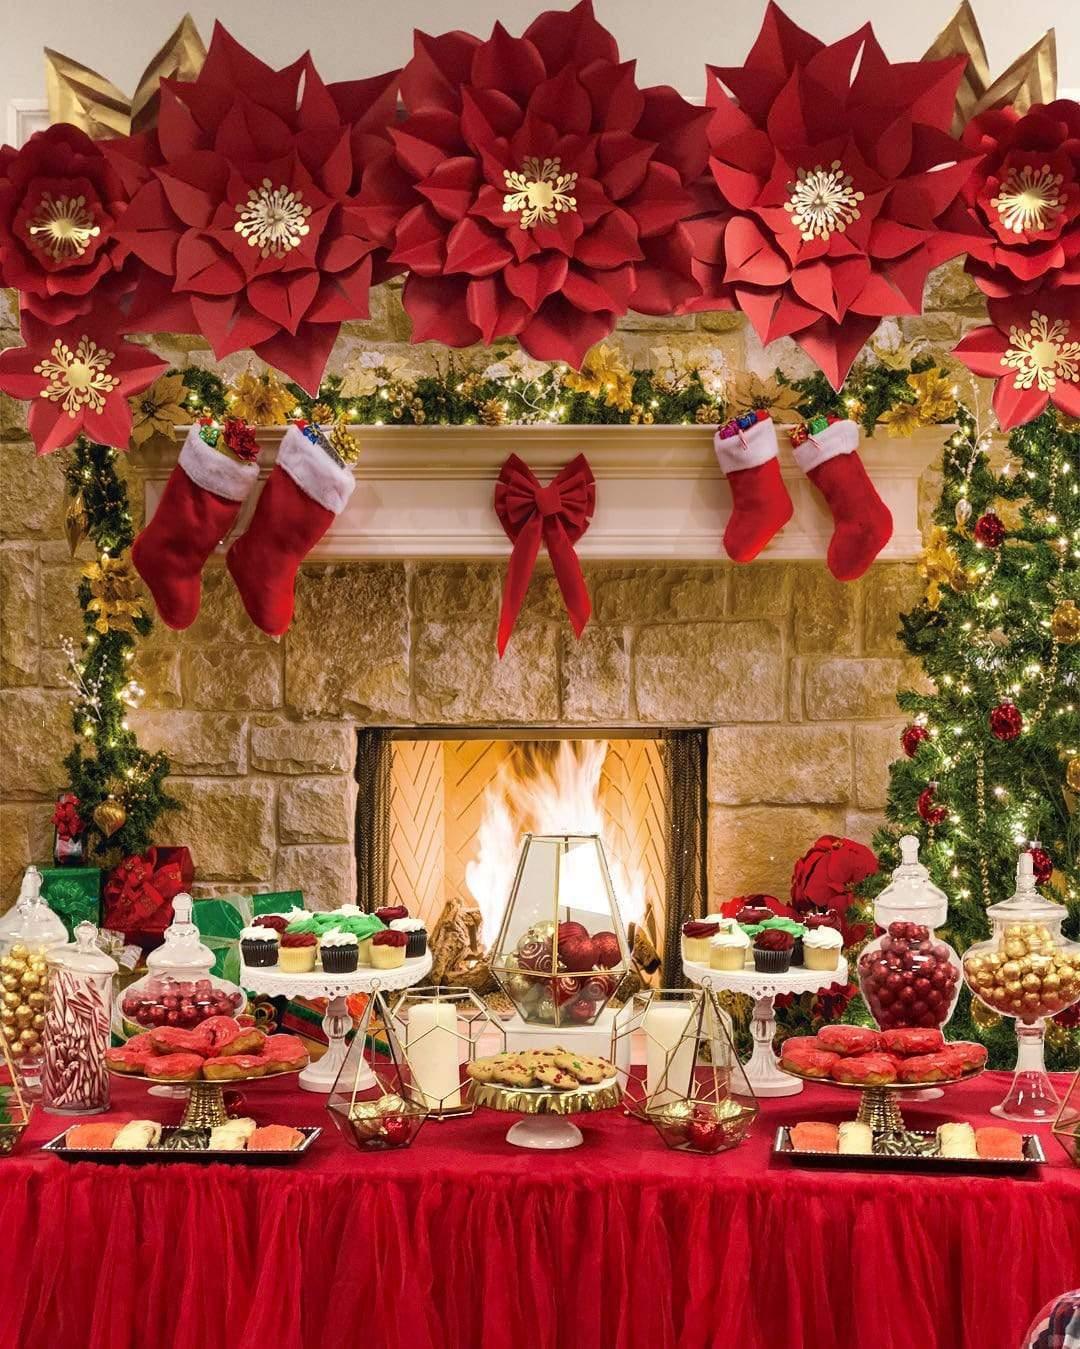 Allenjoy Christmas Xmas Fireplace Backdrop Tree Stockings Backdrop - Allenjoystudio